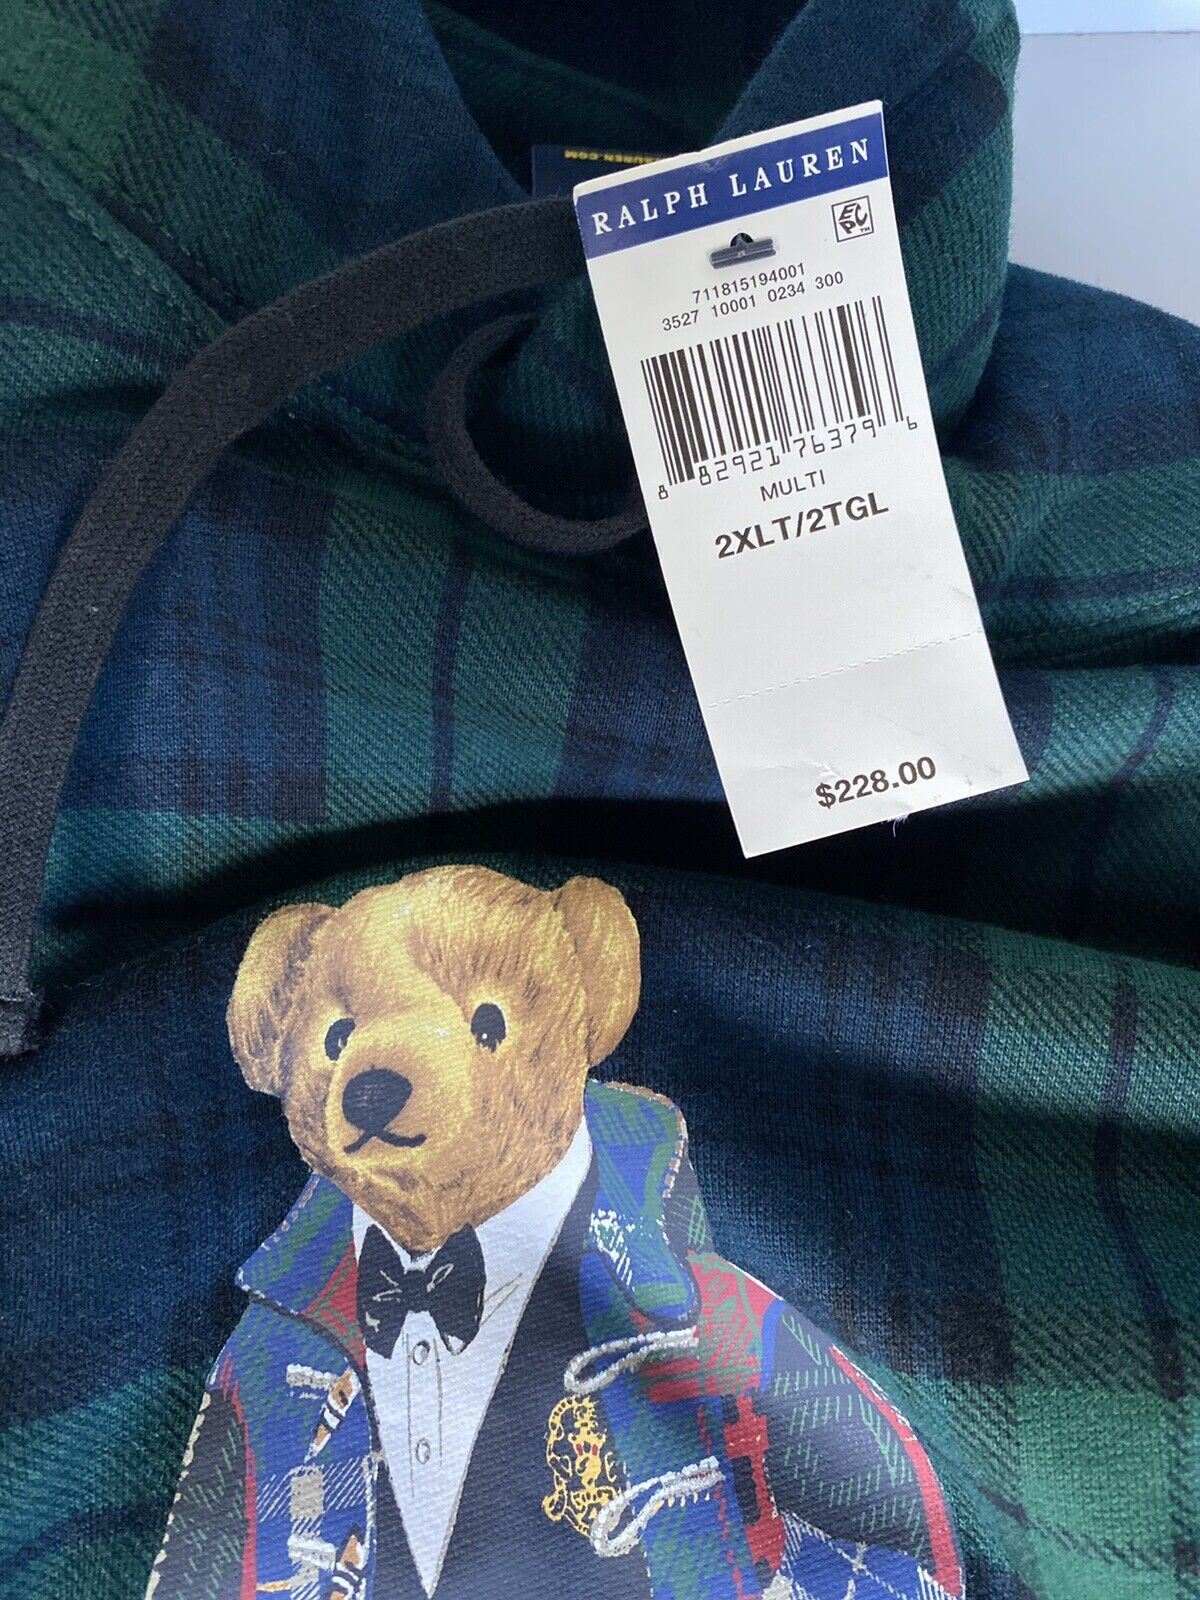 New $228 Polo Ralph Lauren Long Sleeve Bear Sweater with Hoodie Green 2XLT/2TGL